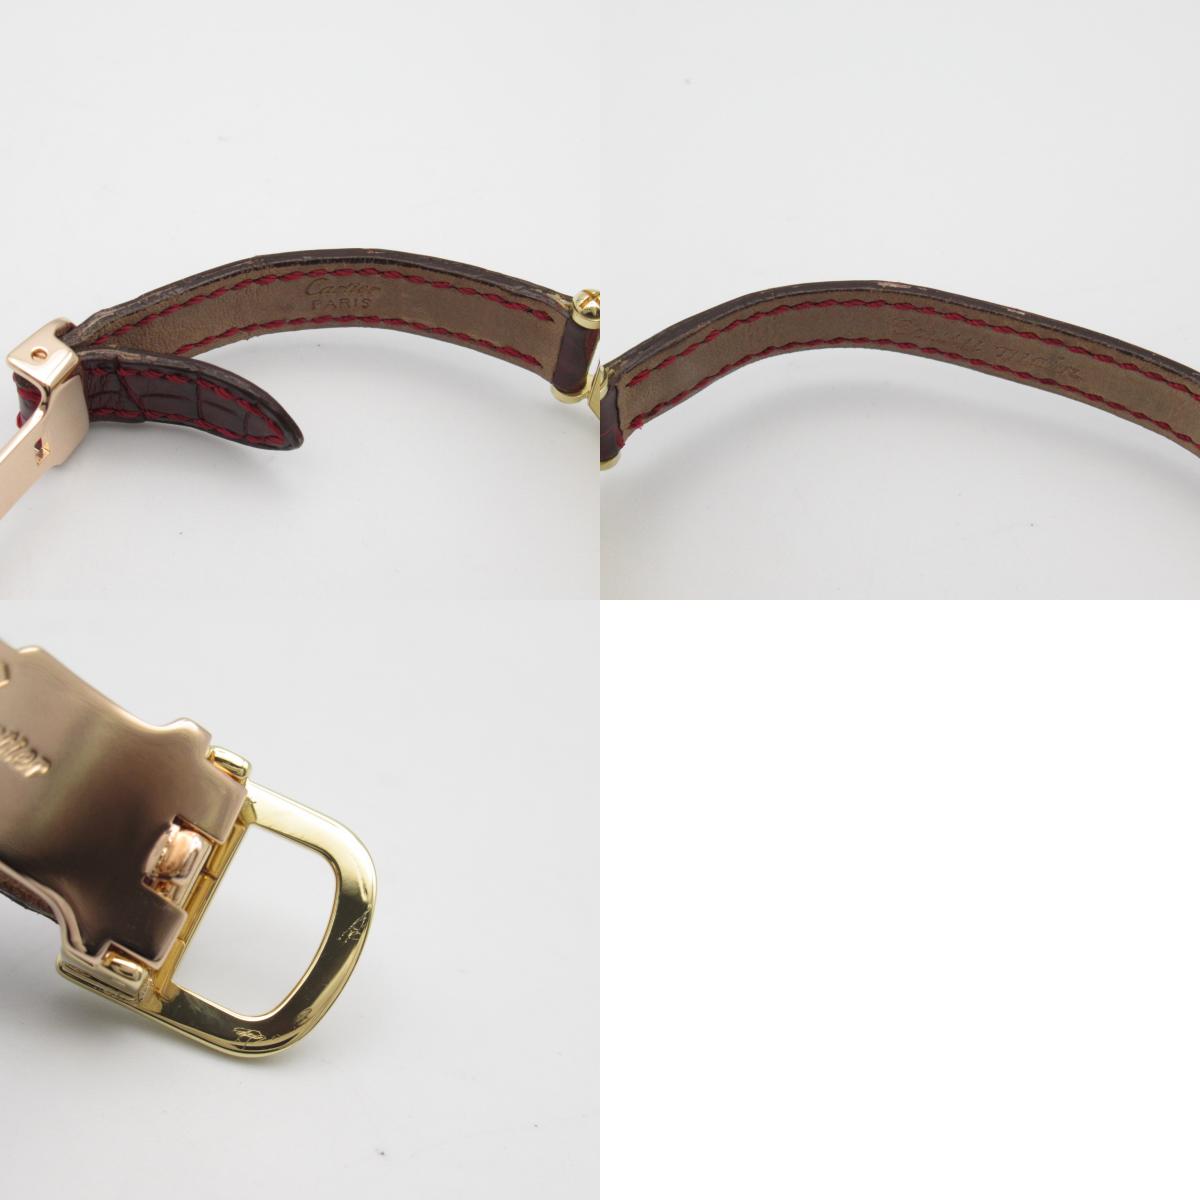 Cartier Tone SM CPCP Watch K18 (yellow g) Leather Belt  Silver W1528551